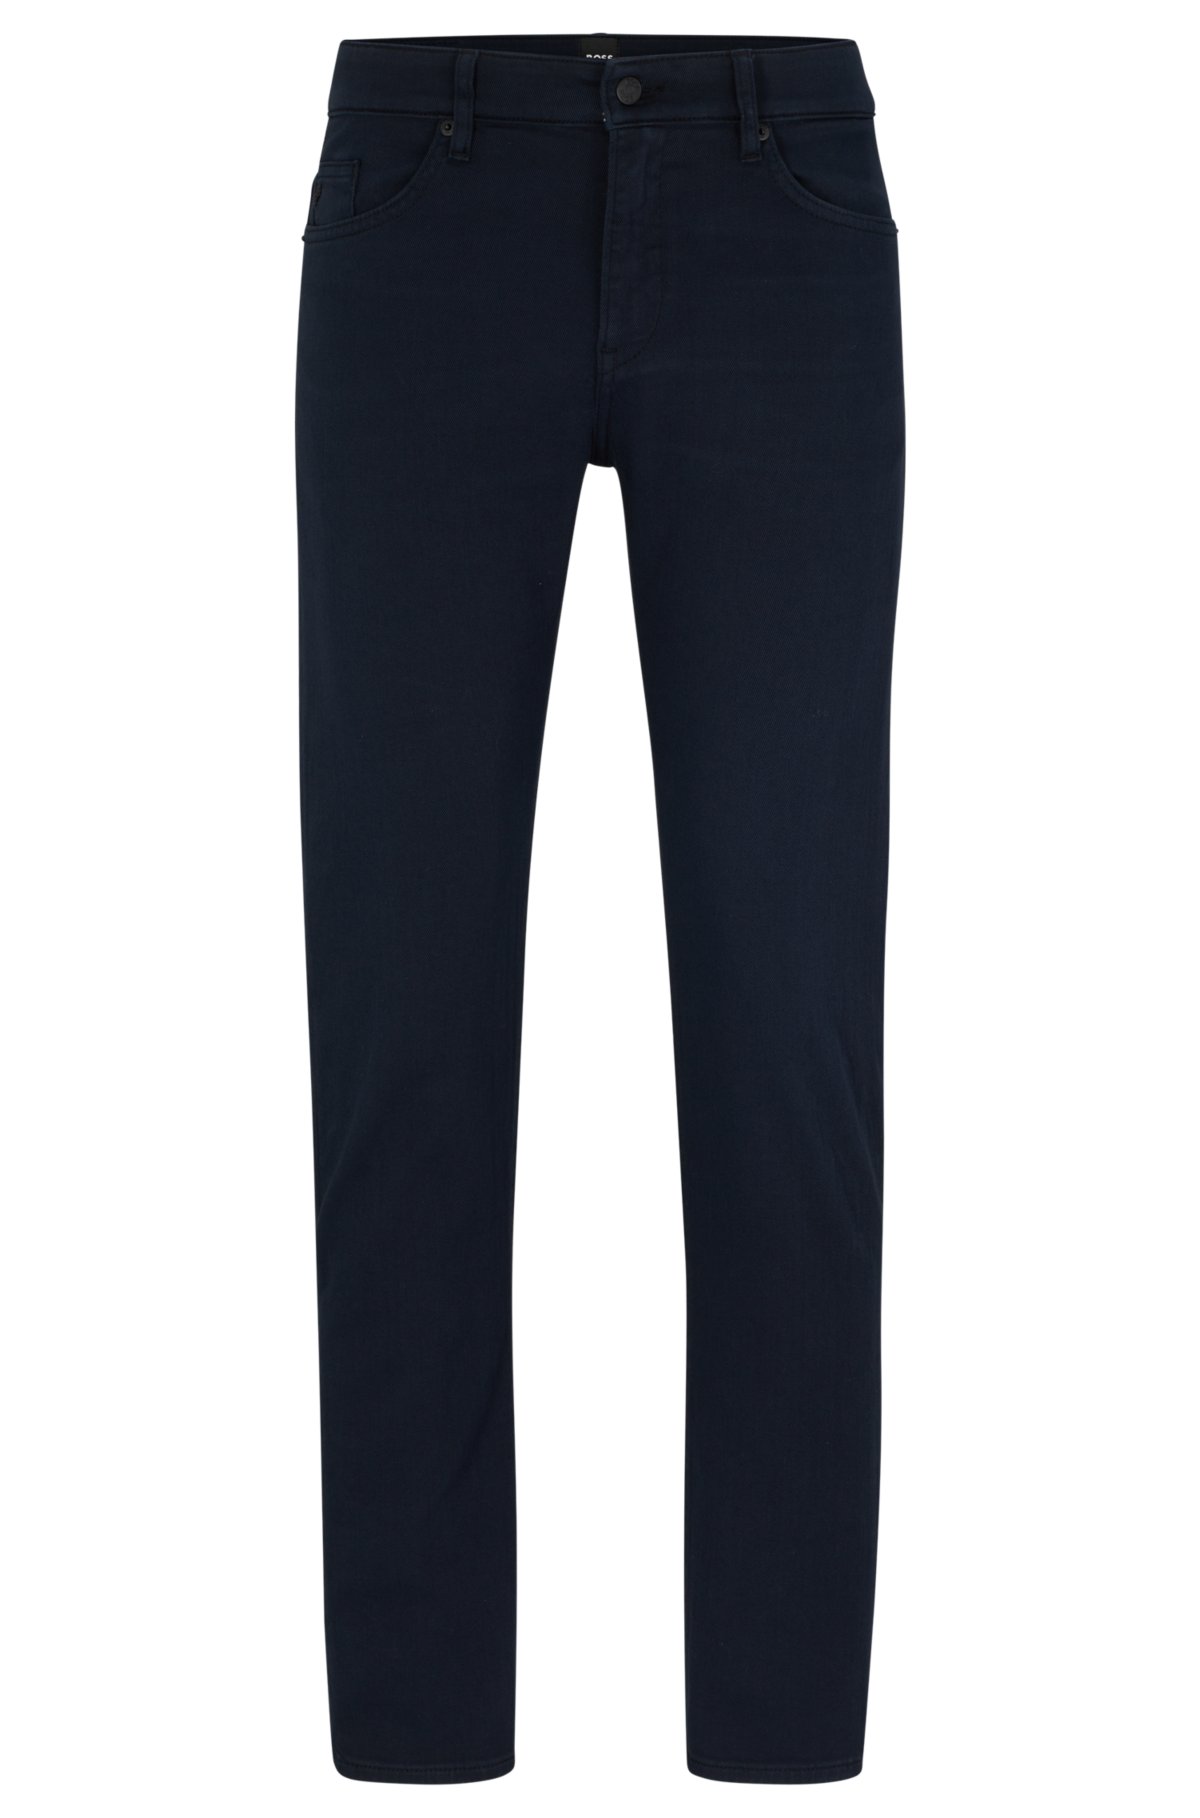 BOSS - Slim-fit jeans in dark-blue Italian super-soft denim